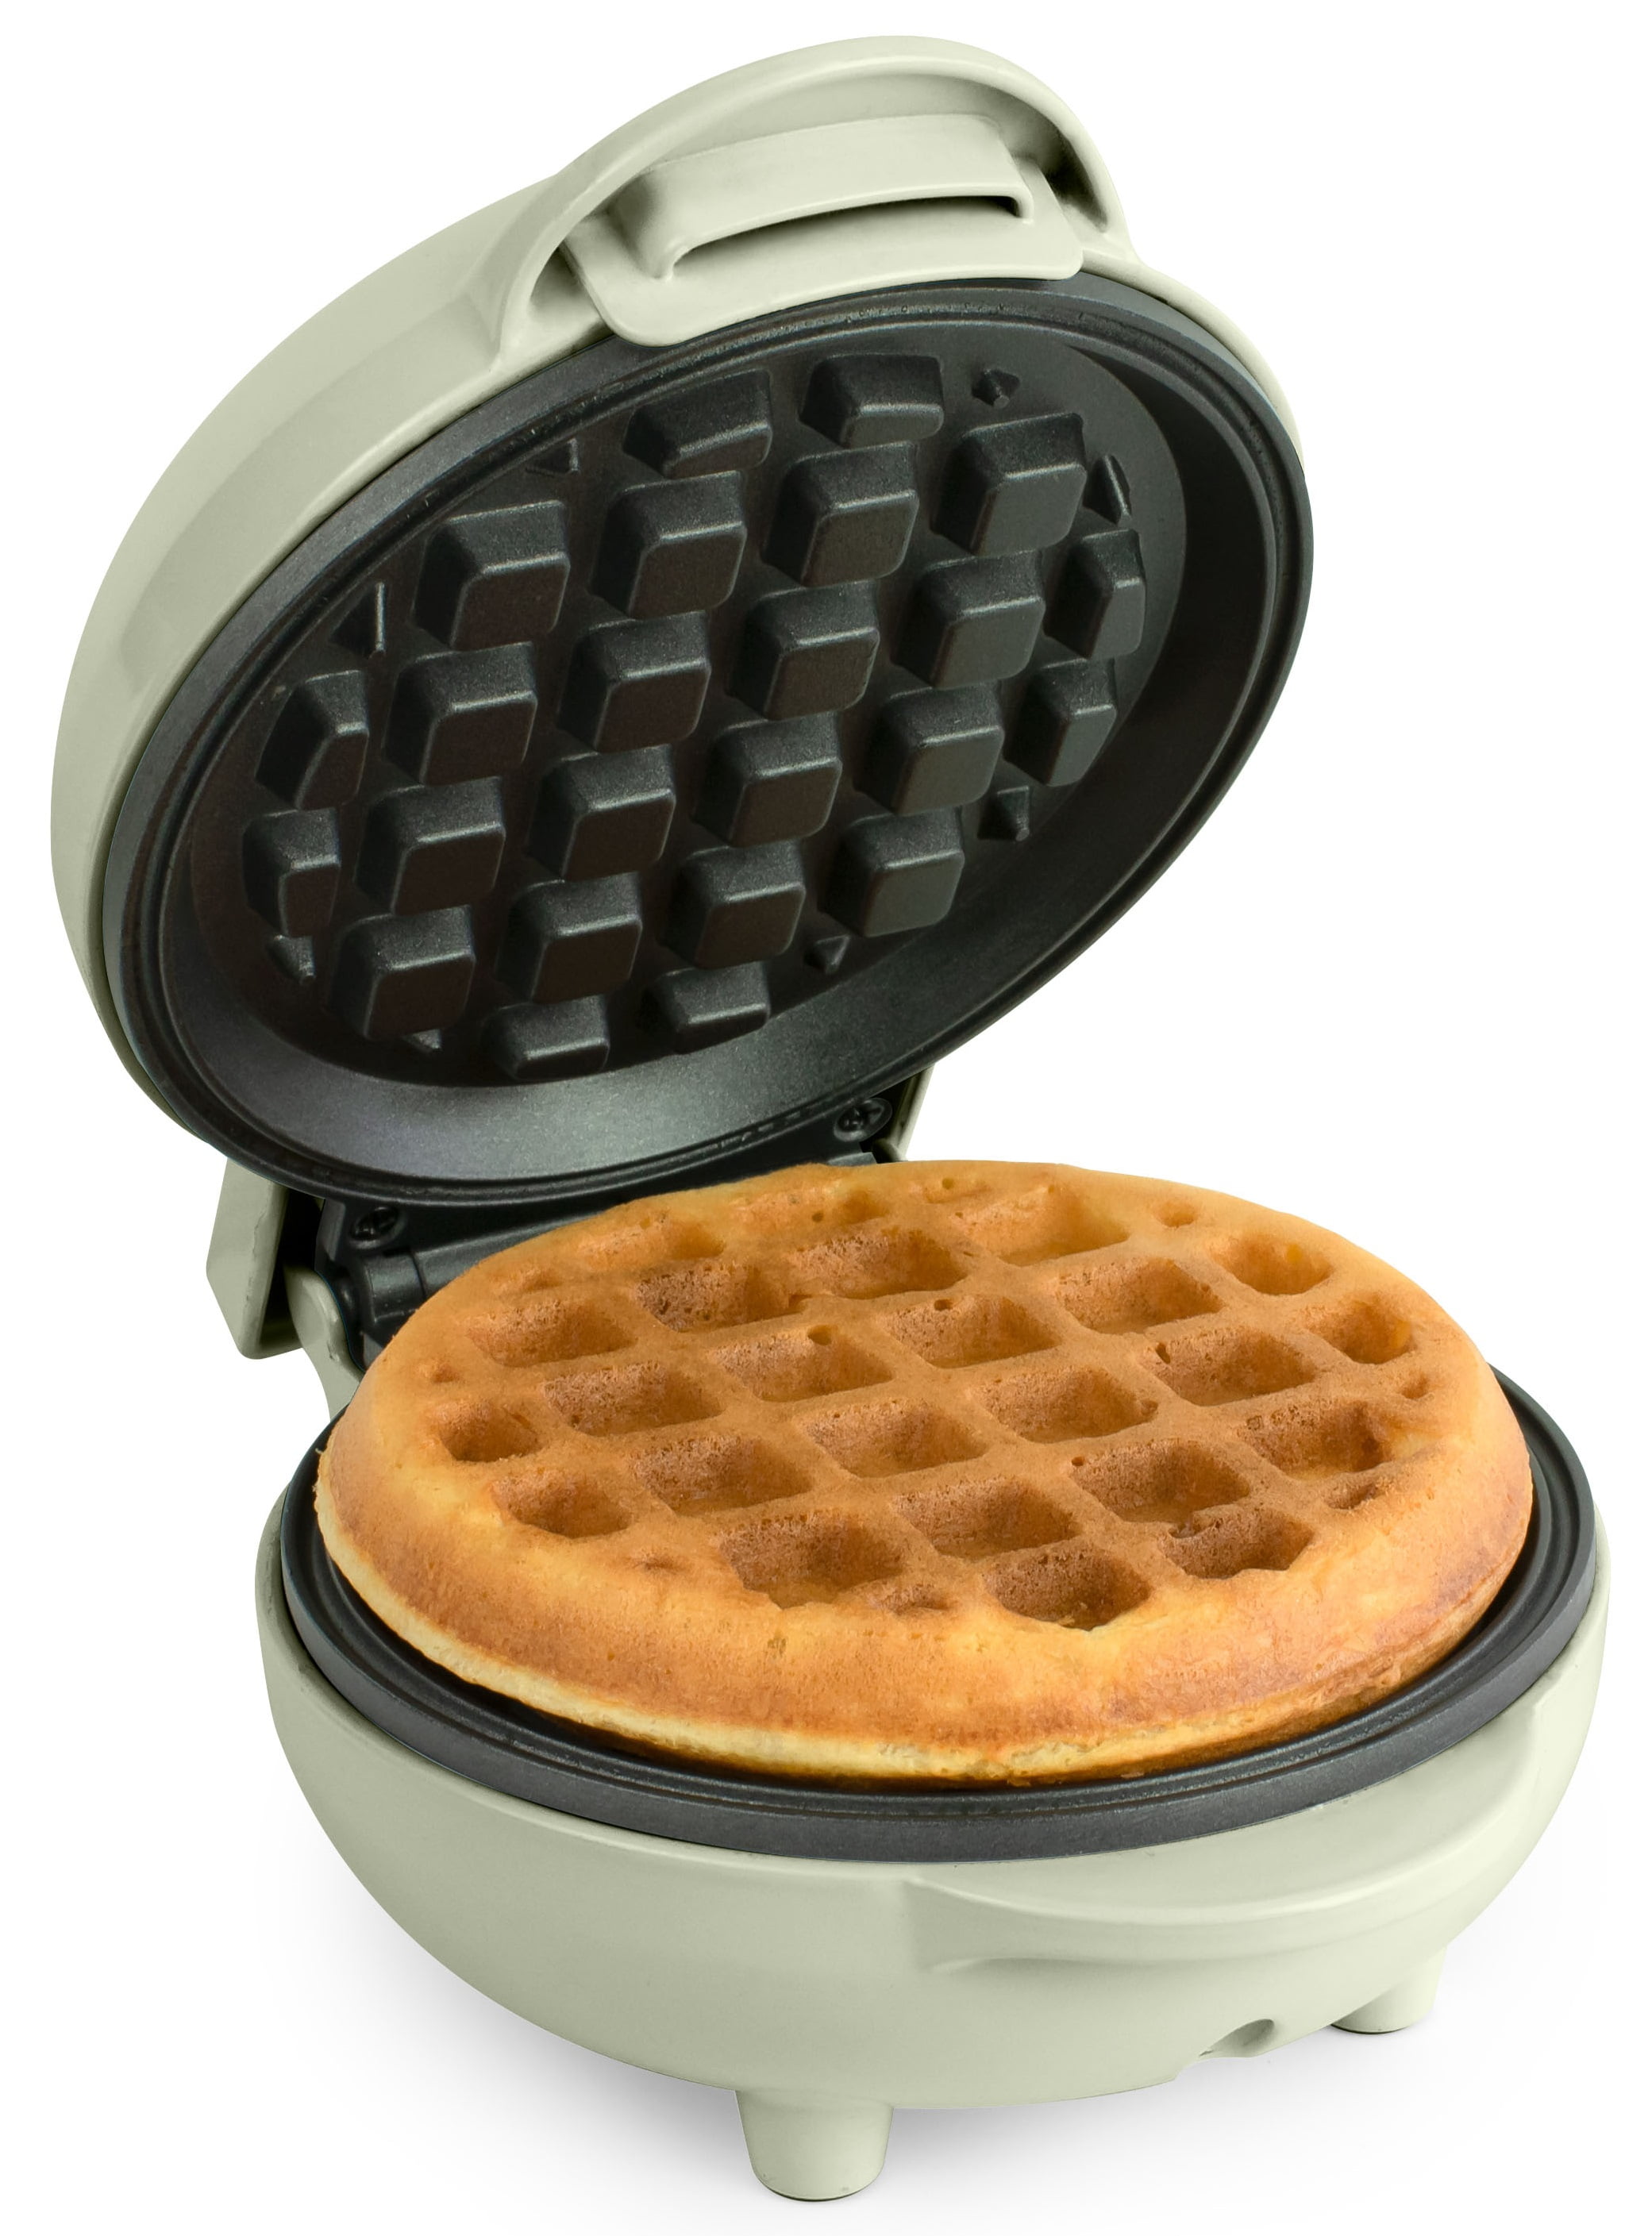  Presto 03500 Belgian Waffle Bowl Maker,Black, 9.3 x 8.25 x 5.25  inches: Home & Kitchen